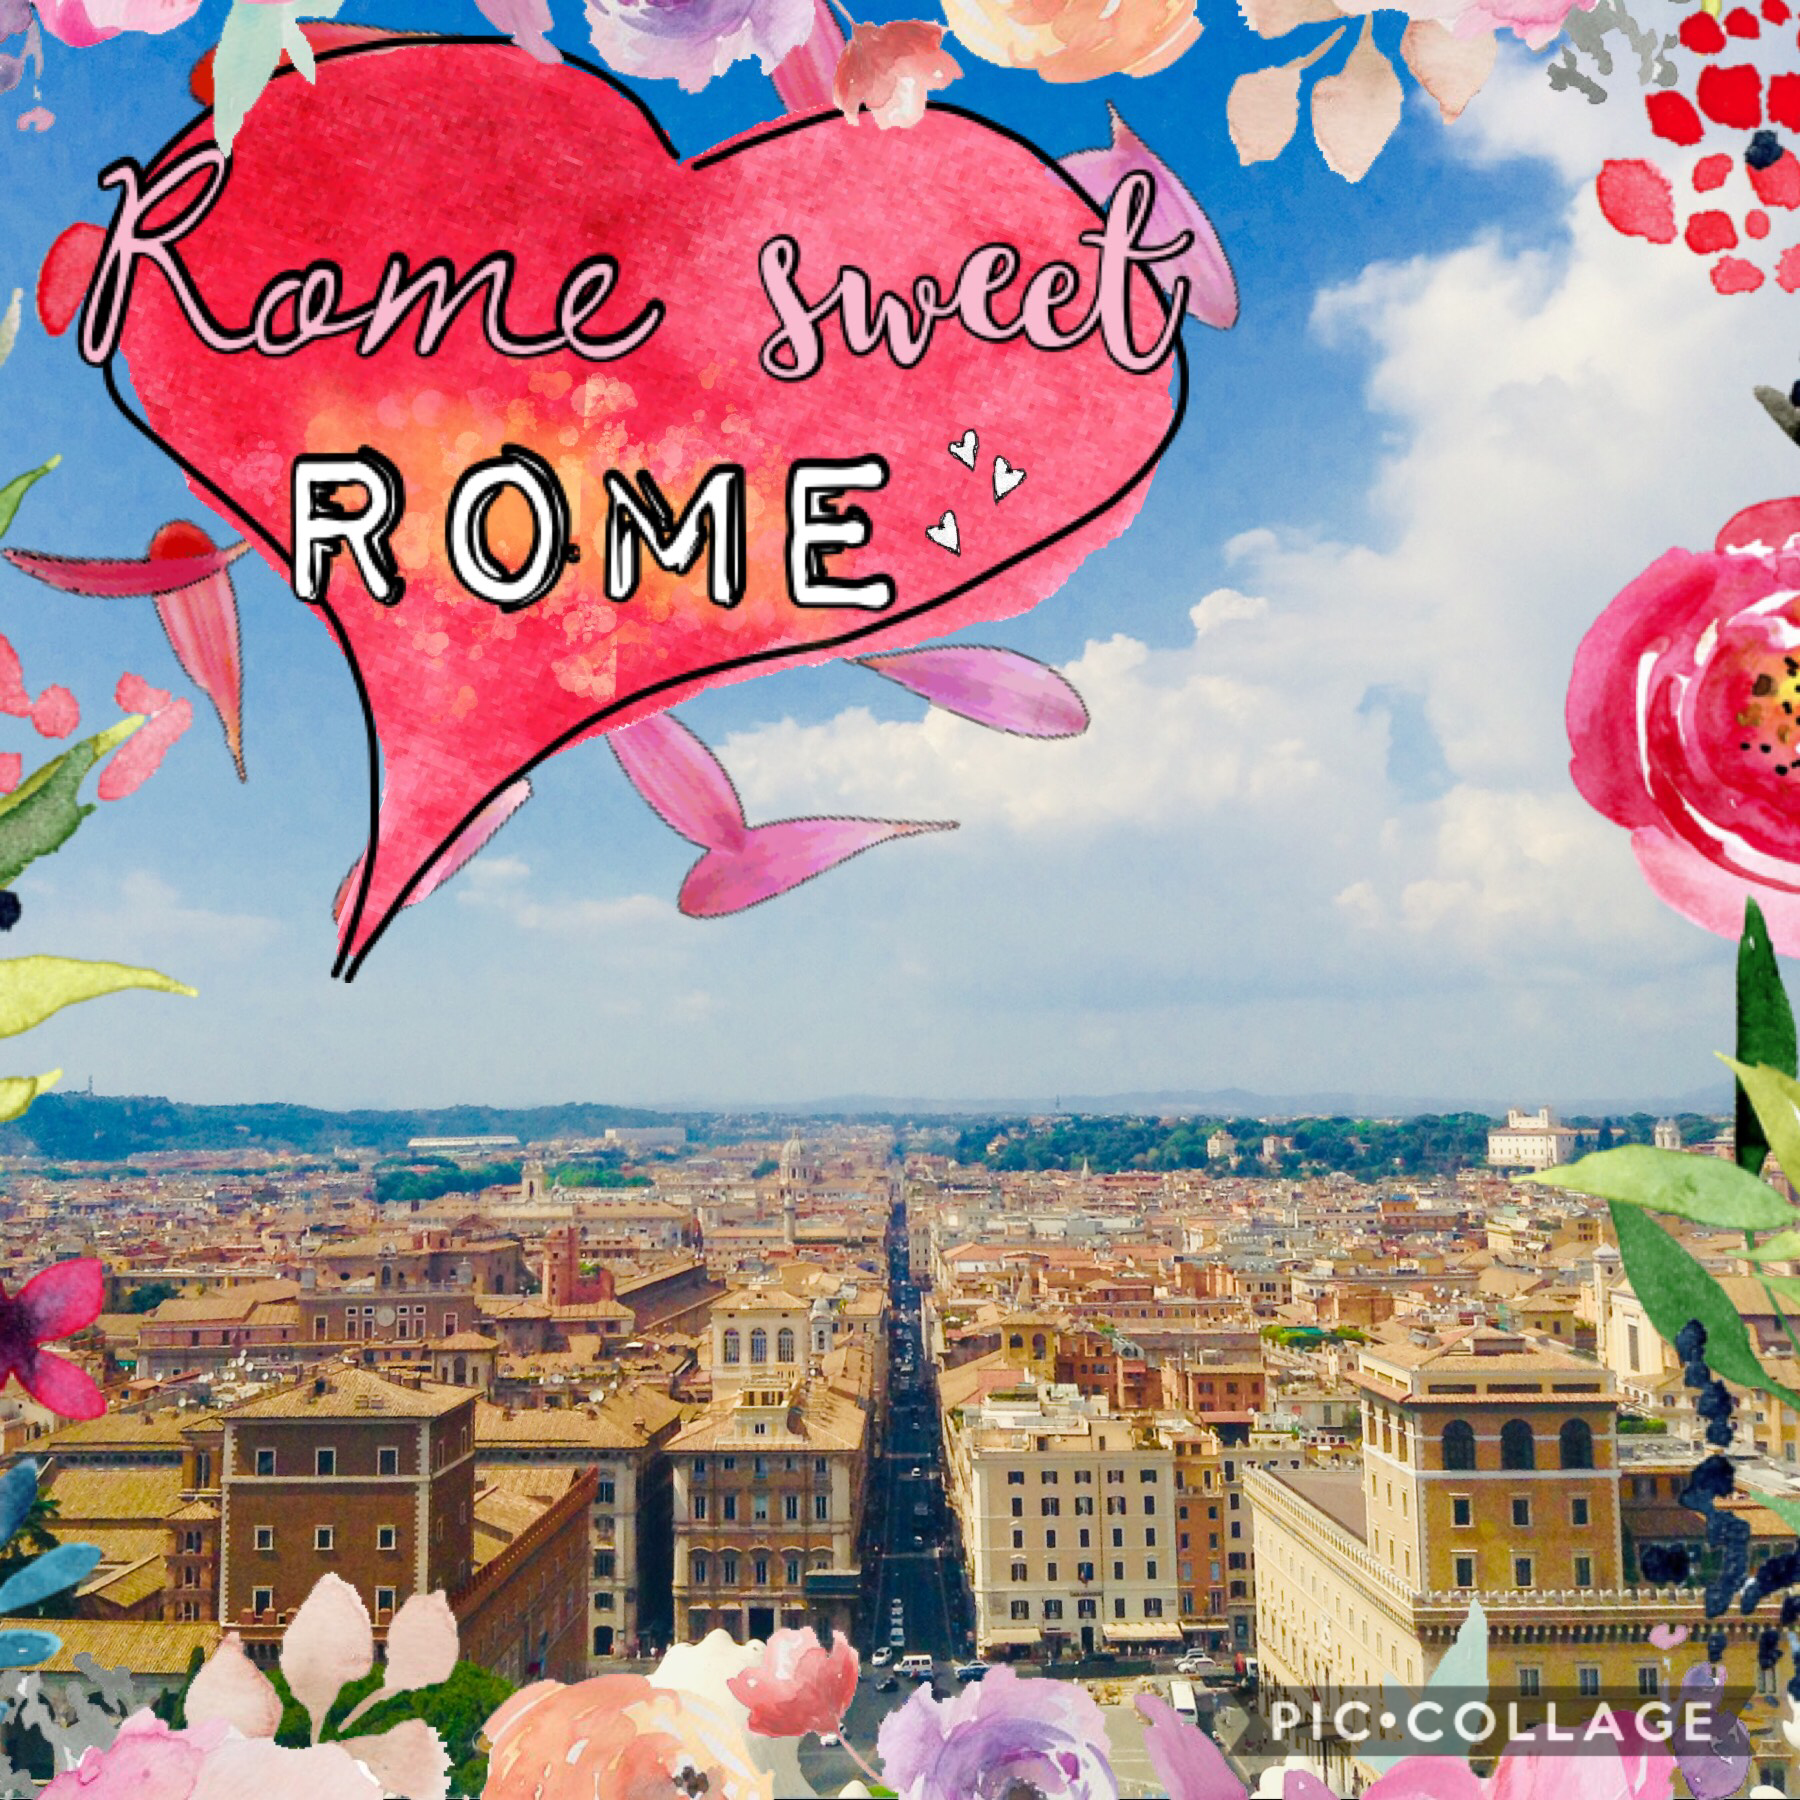 ♥️💐🌇
~Roma dolce Roma~ I love Rommmmme hehe 🥰 